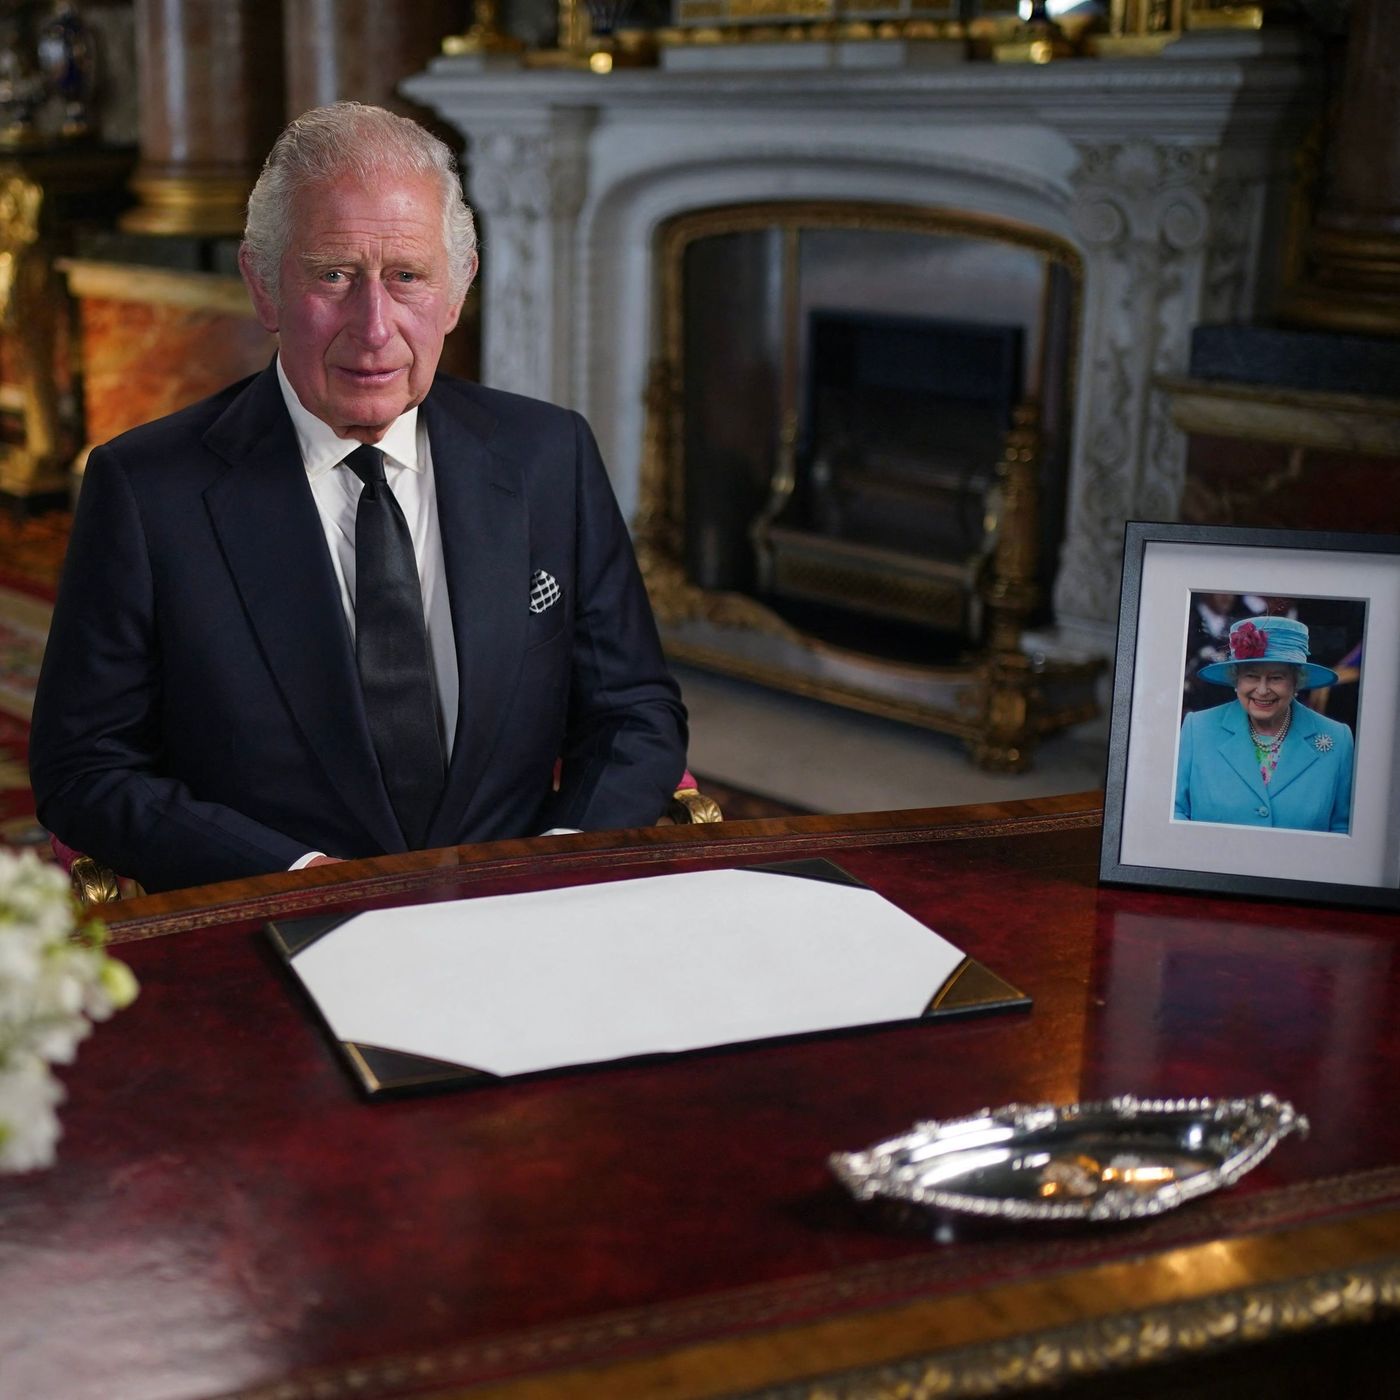 King Charles III (Full Speech) from Election 2022 Breaking News on Hark